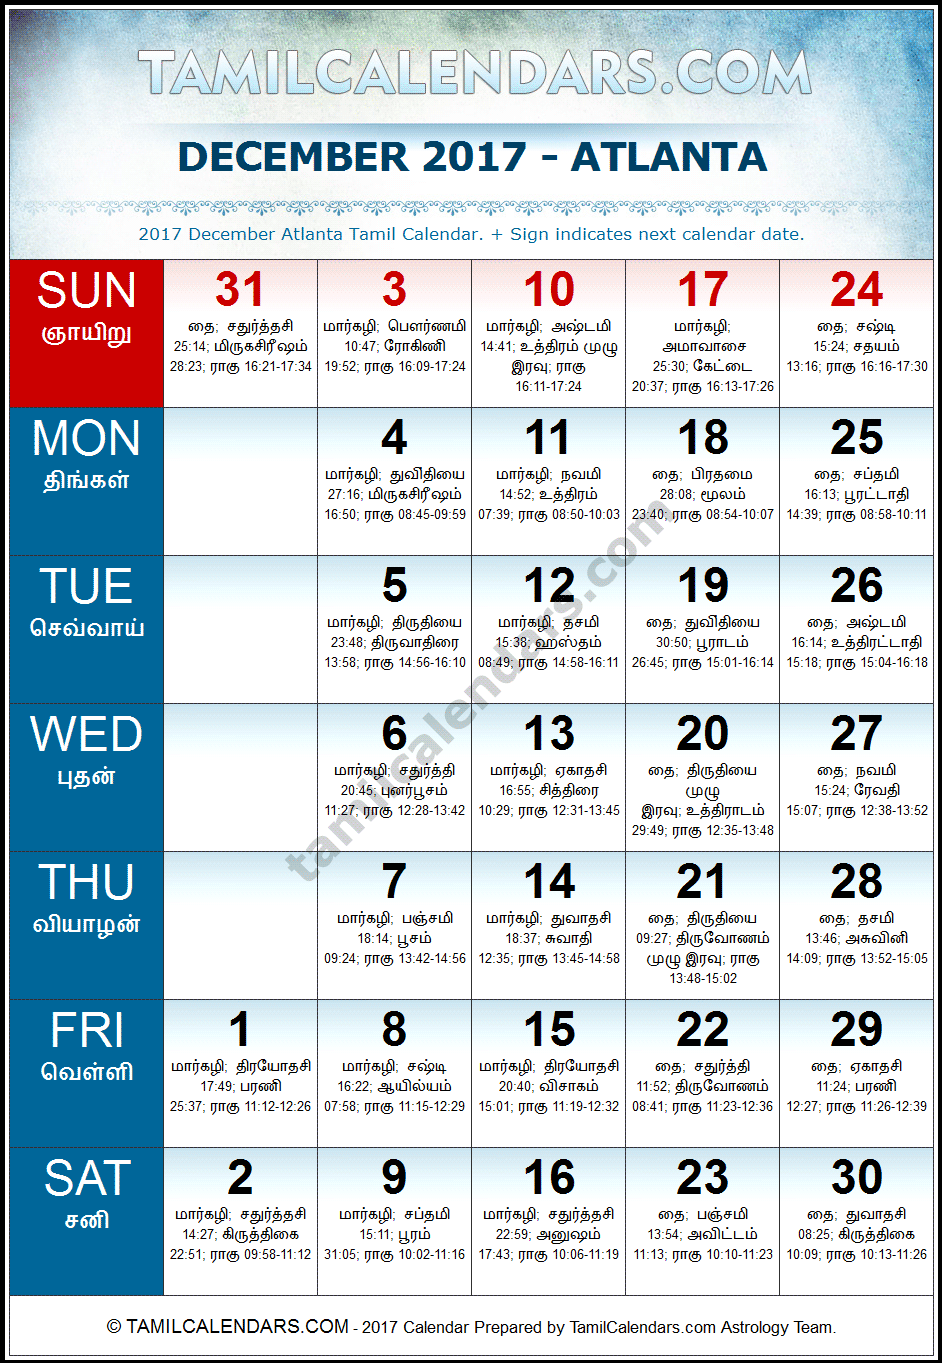 December 2017 Tamil Calendar for Atlanta, USA